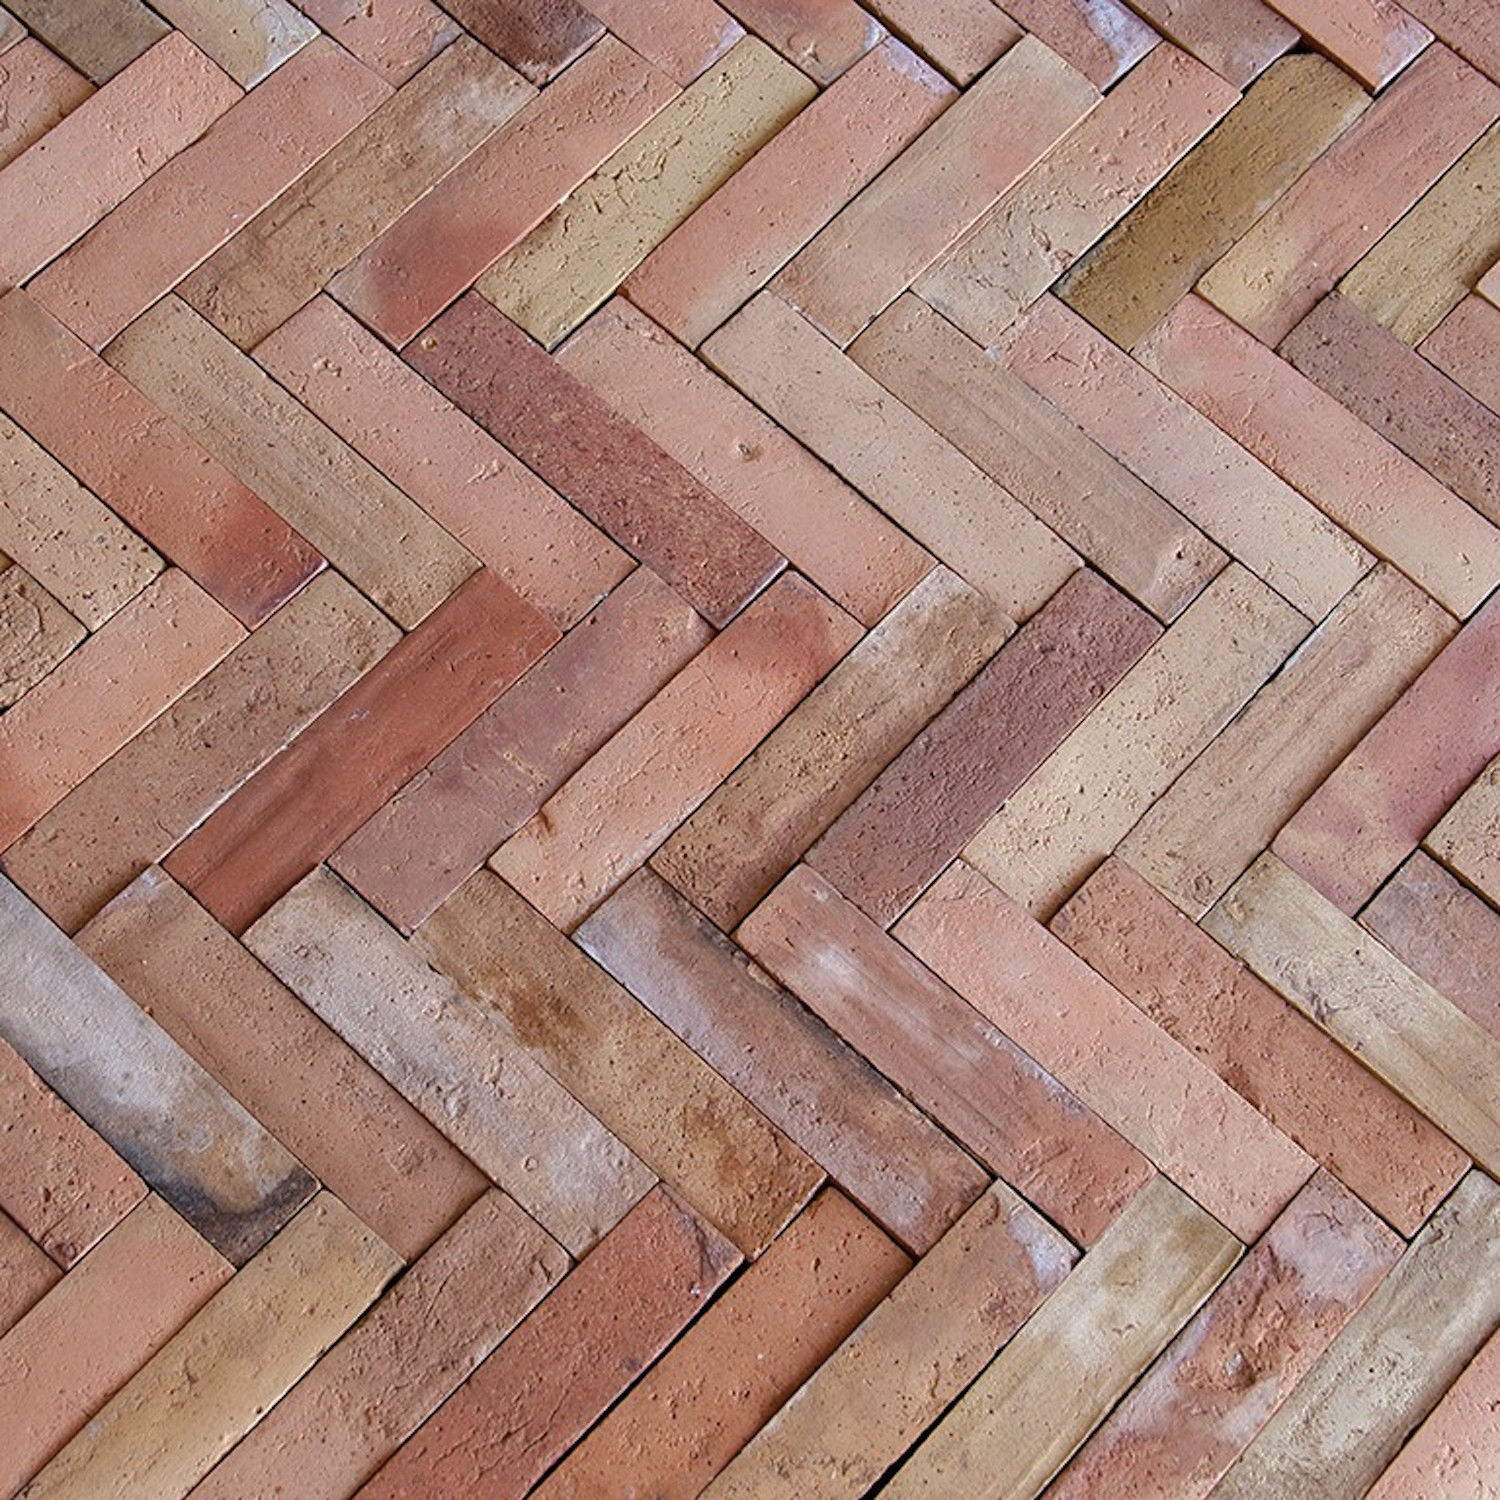 Antique Reclaimed Terracotta Tile Flooring: Parefeuilles Rose